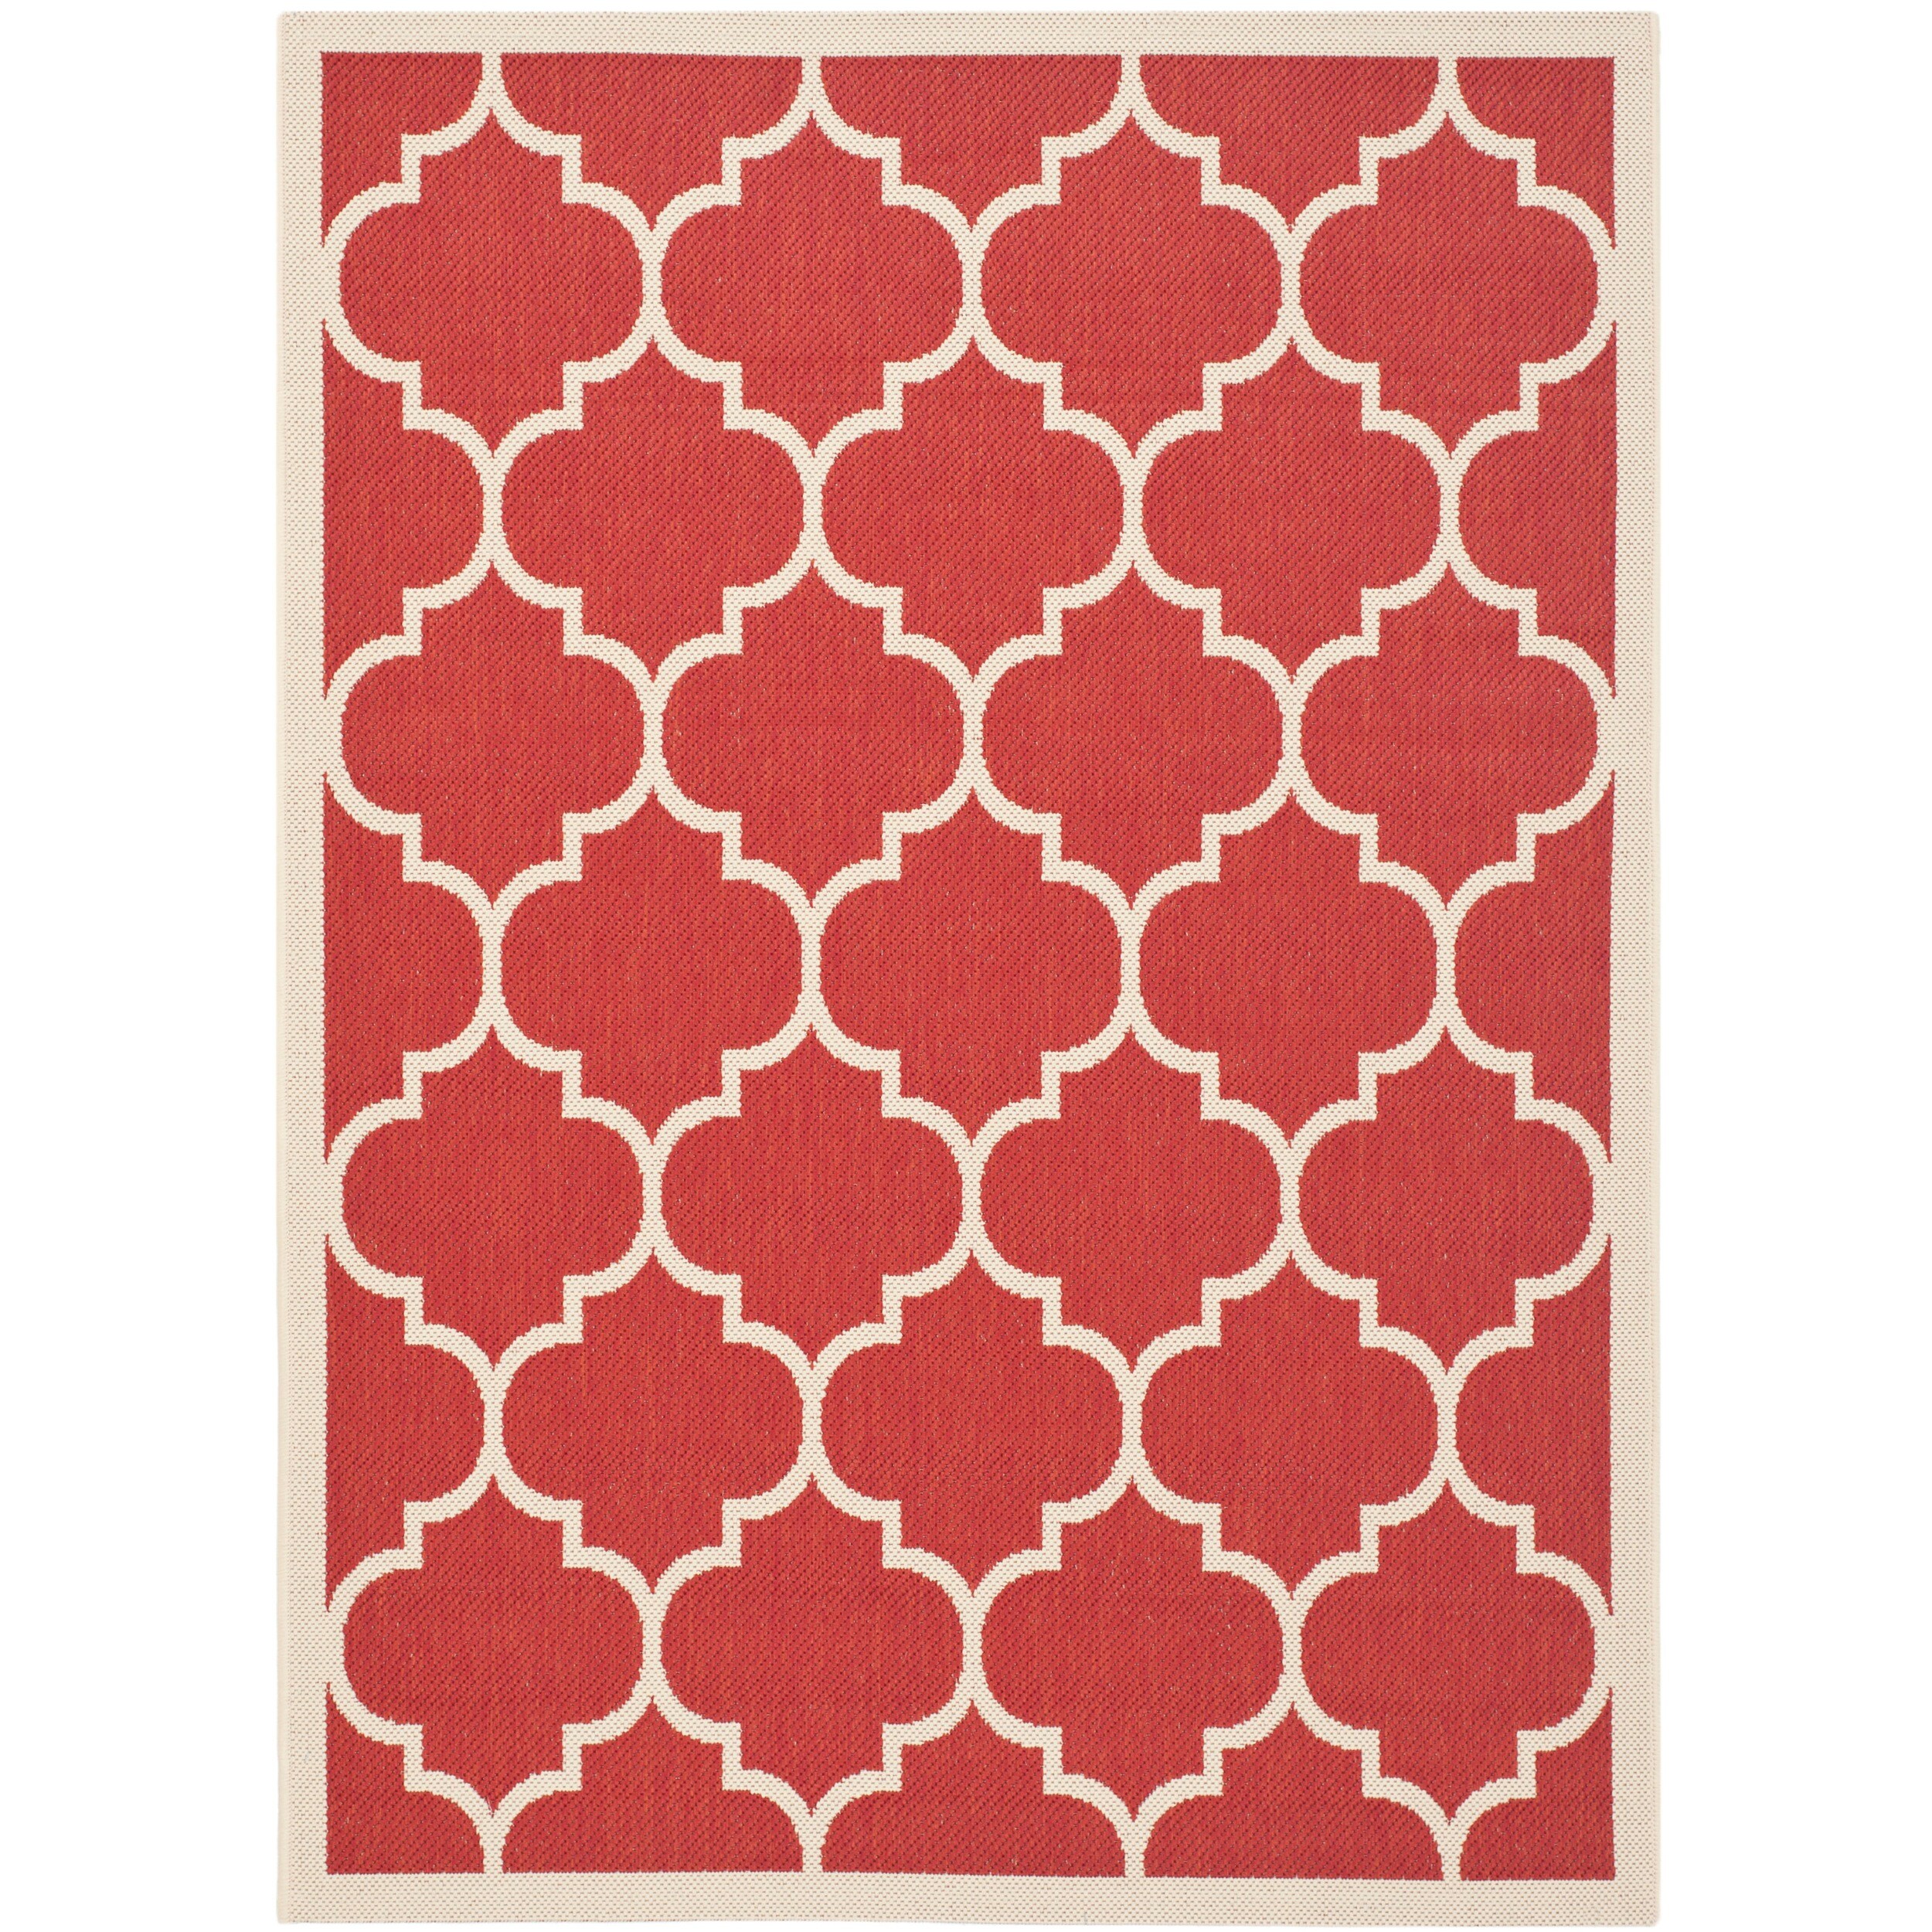 Safavieh Indoor/ Outdoor Courtyard Trellis pattern Red/ Bone Rug (4 X 57)